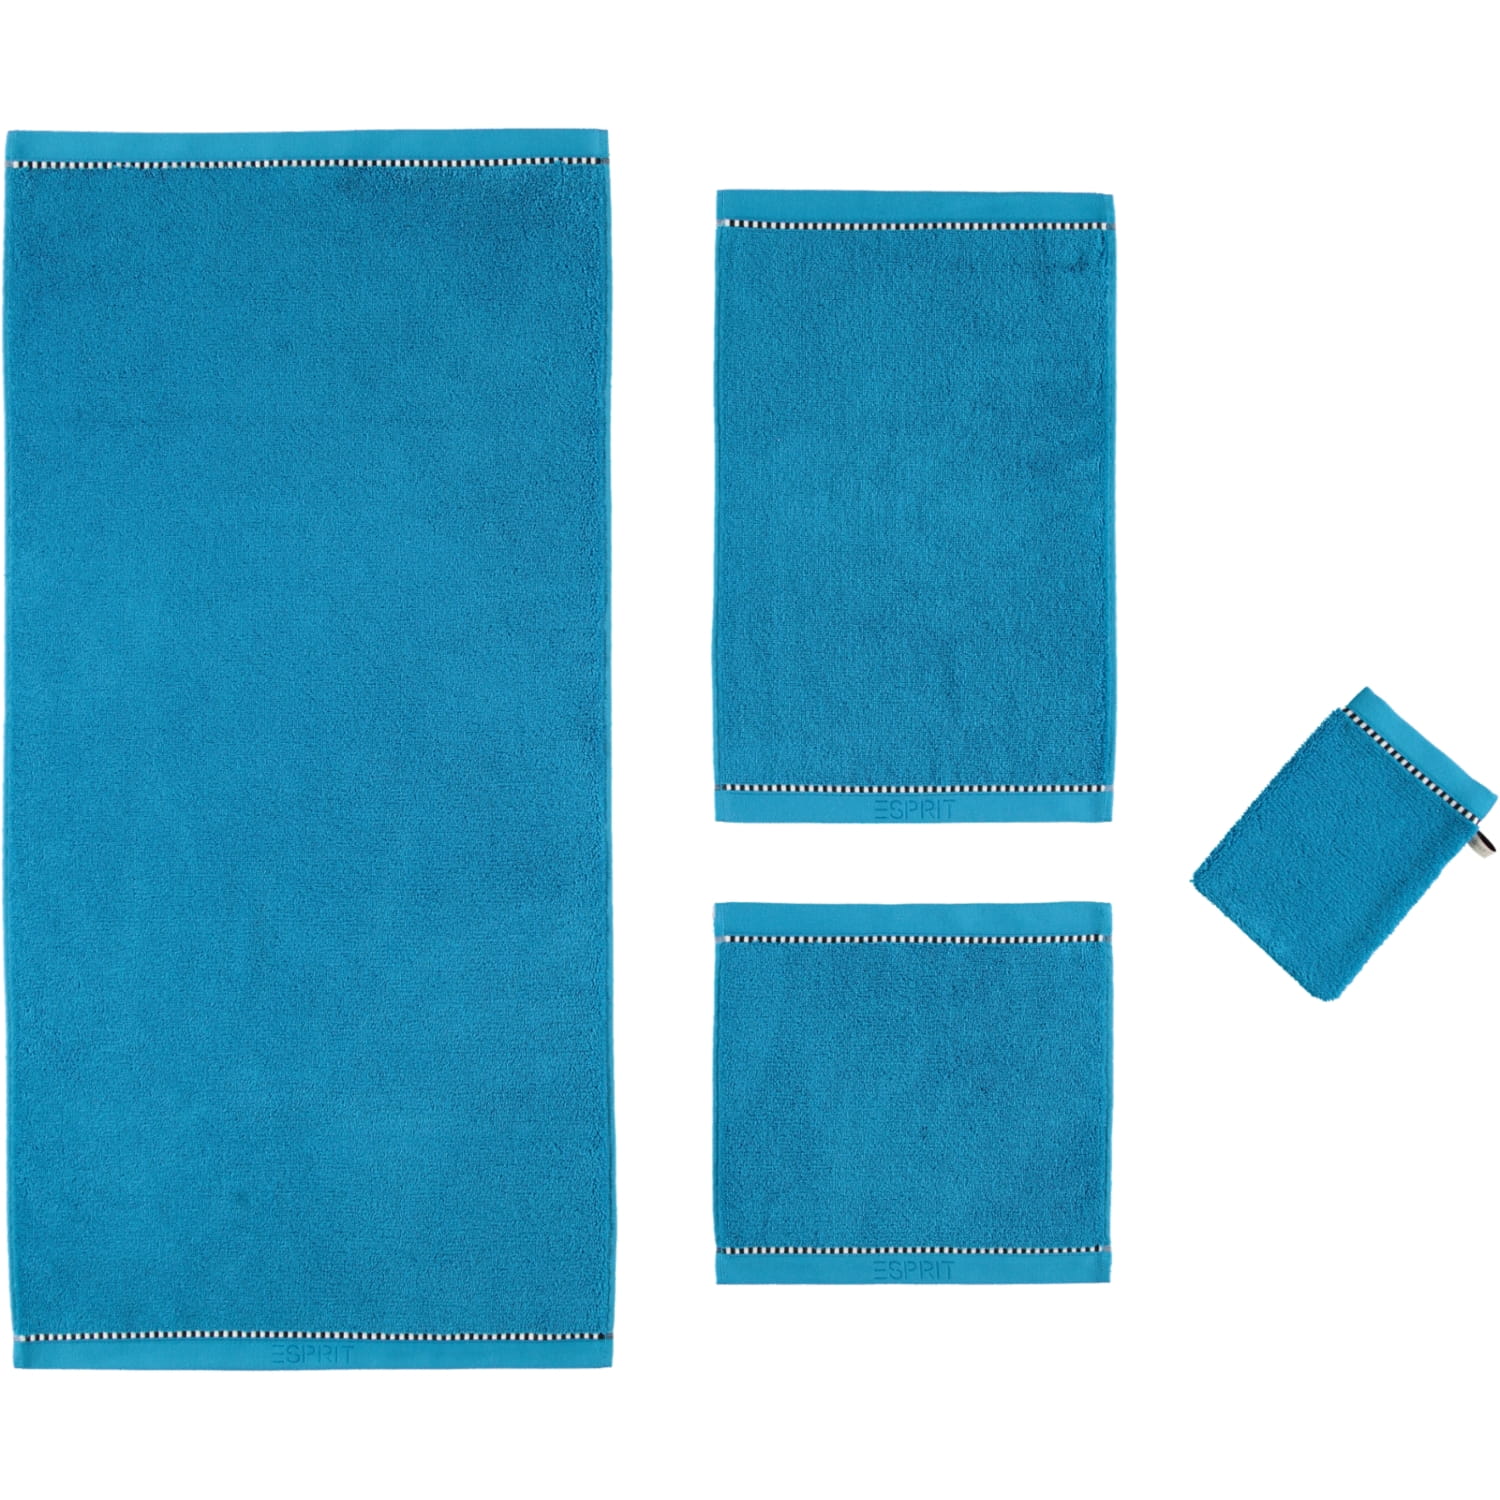 Esprit Box Solid - Farbe: ocean blue - 4665 | ESPRIT Handtücher | ESPRIT |  Marken